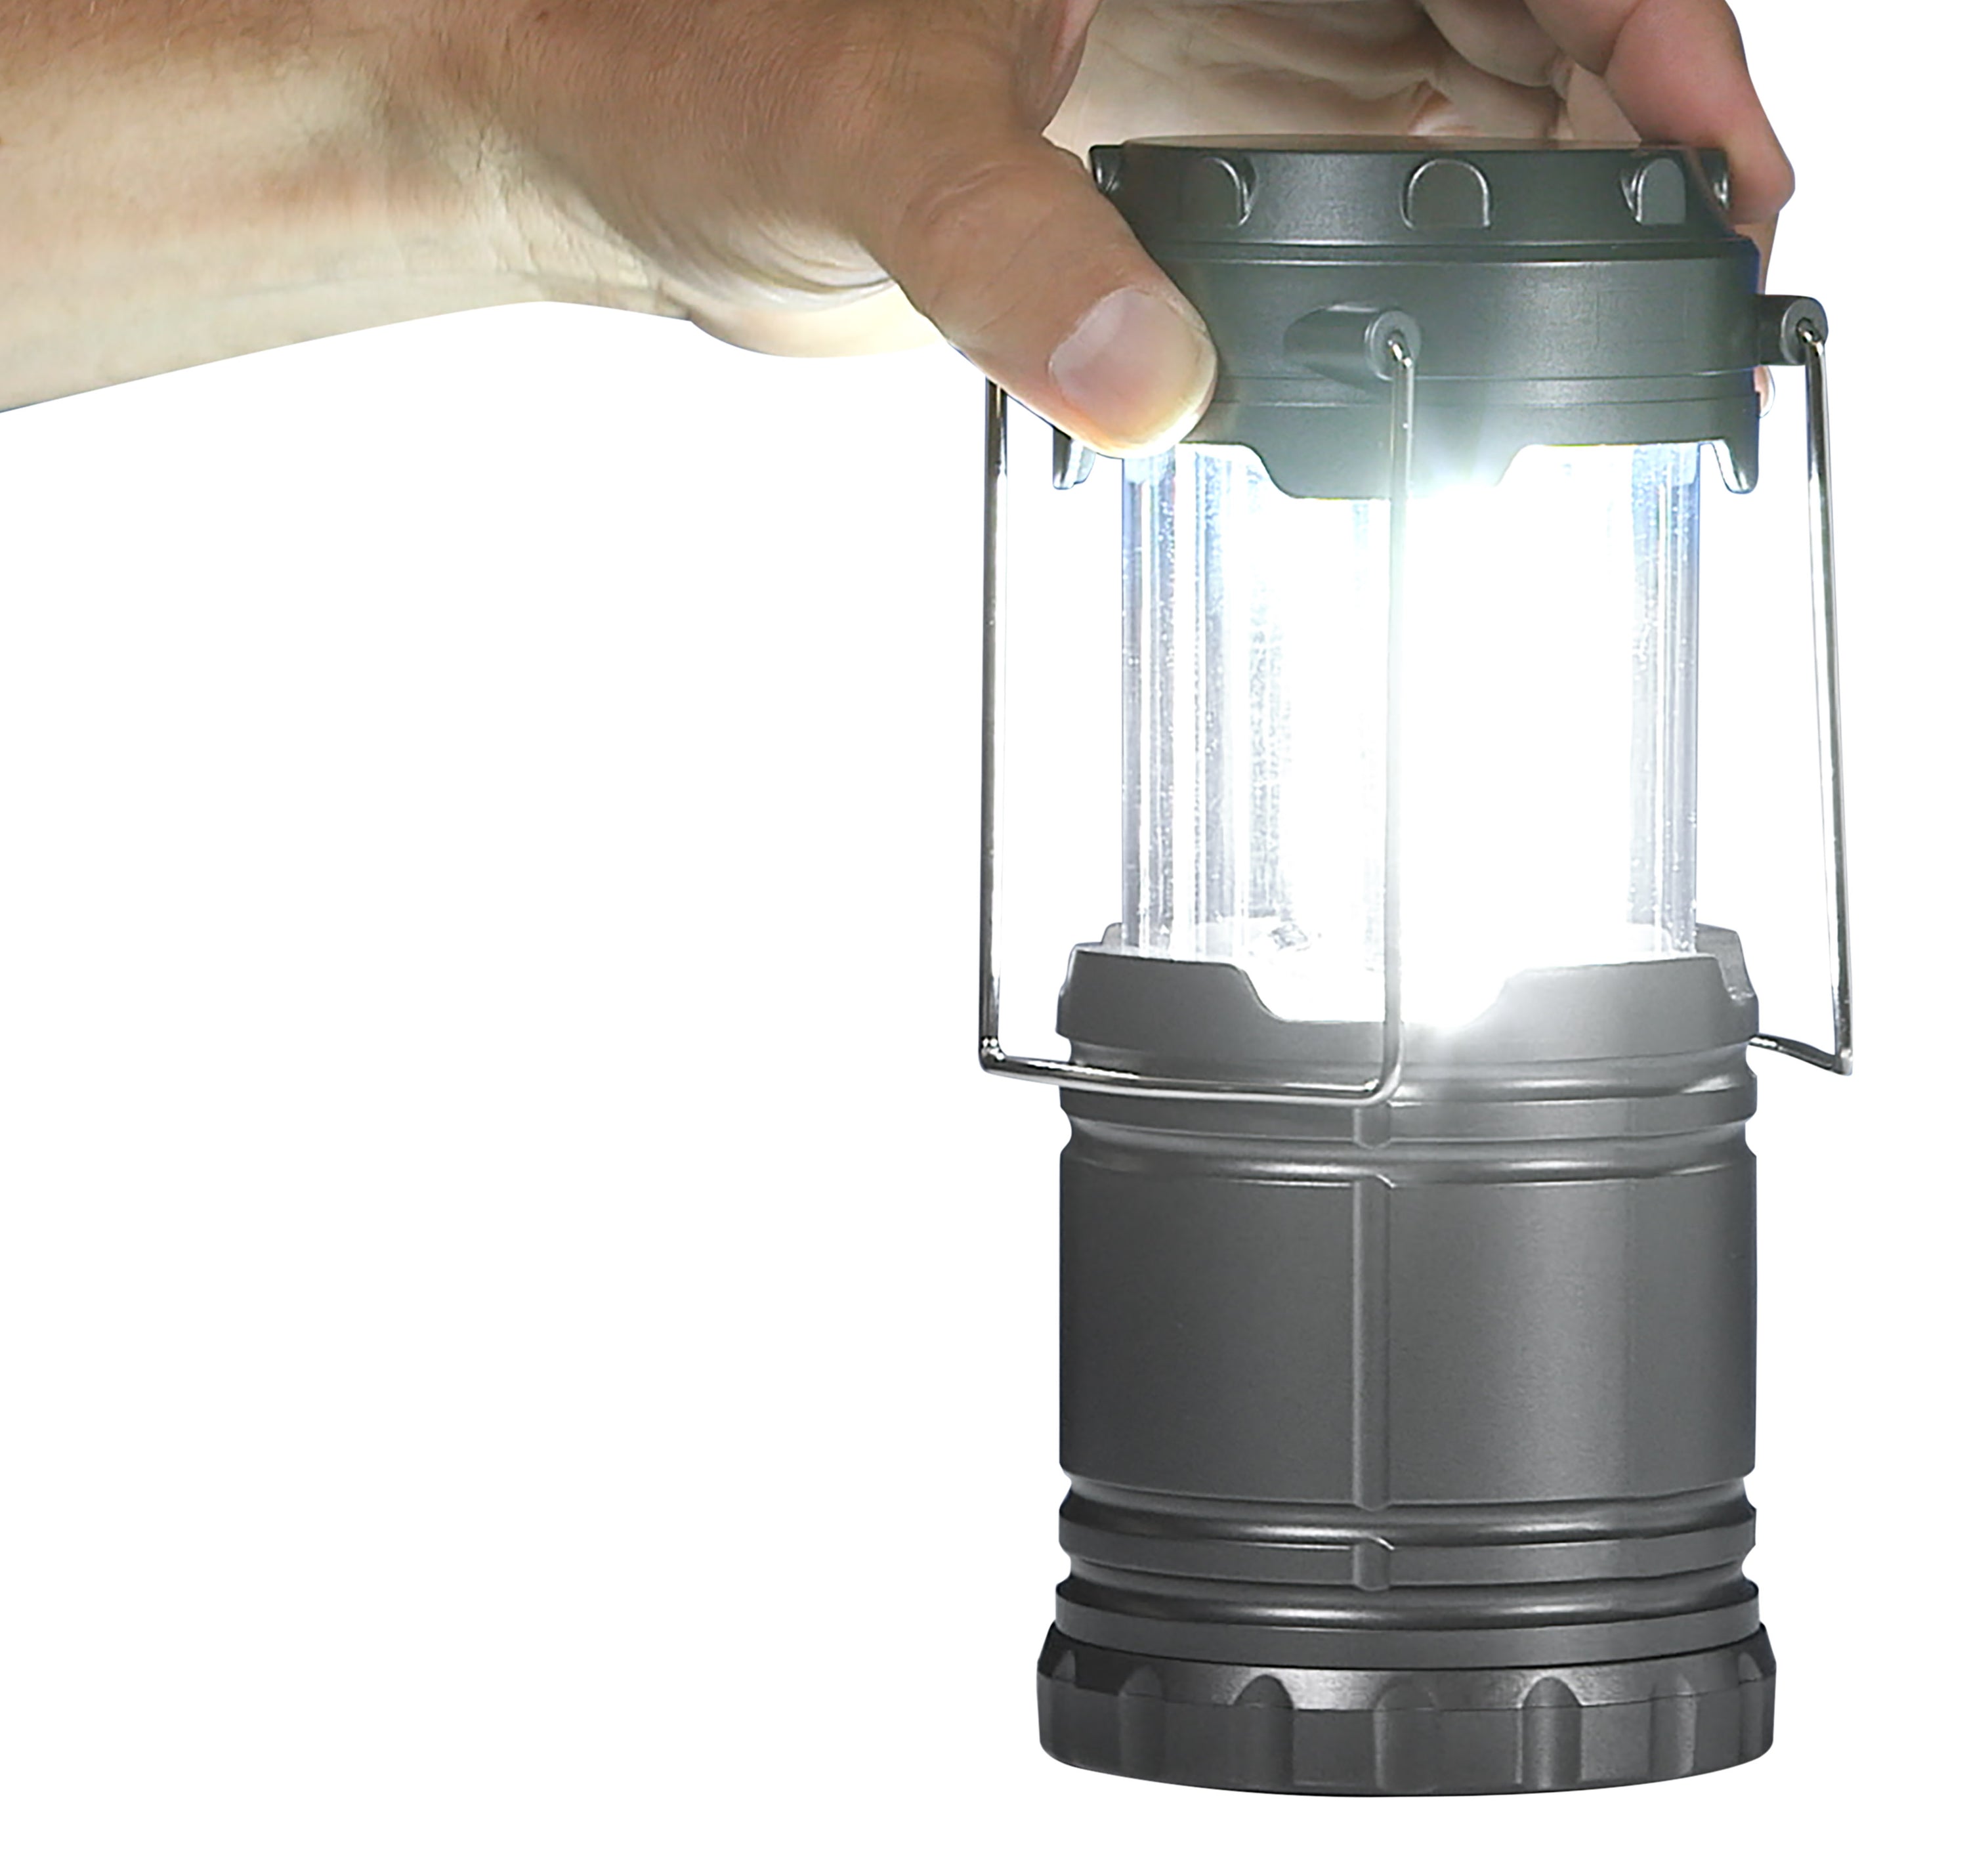 Bell + Howell Taclight High Performance Ultra Bright Flashlight